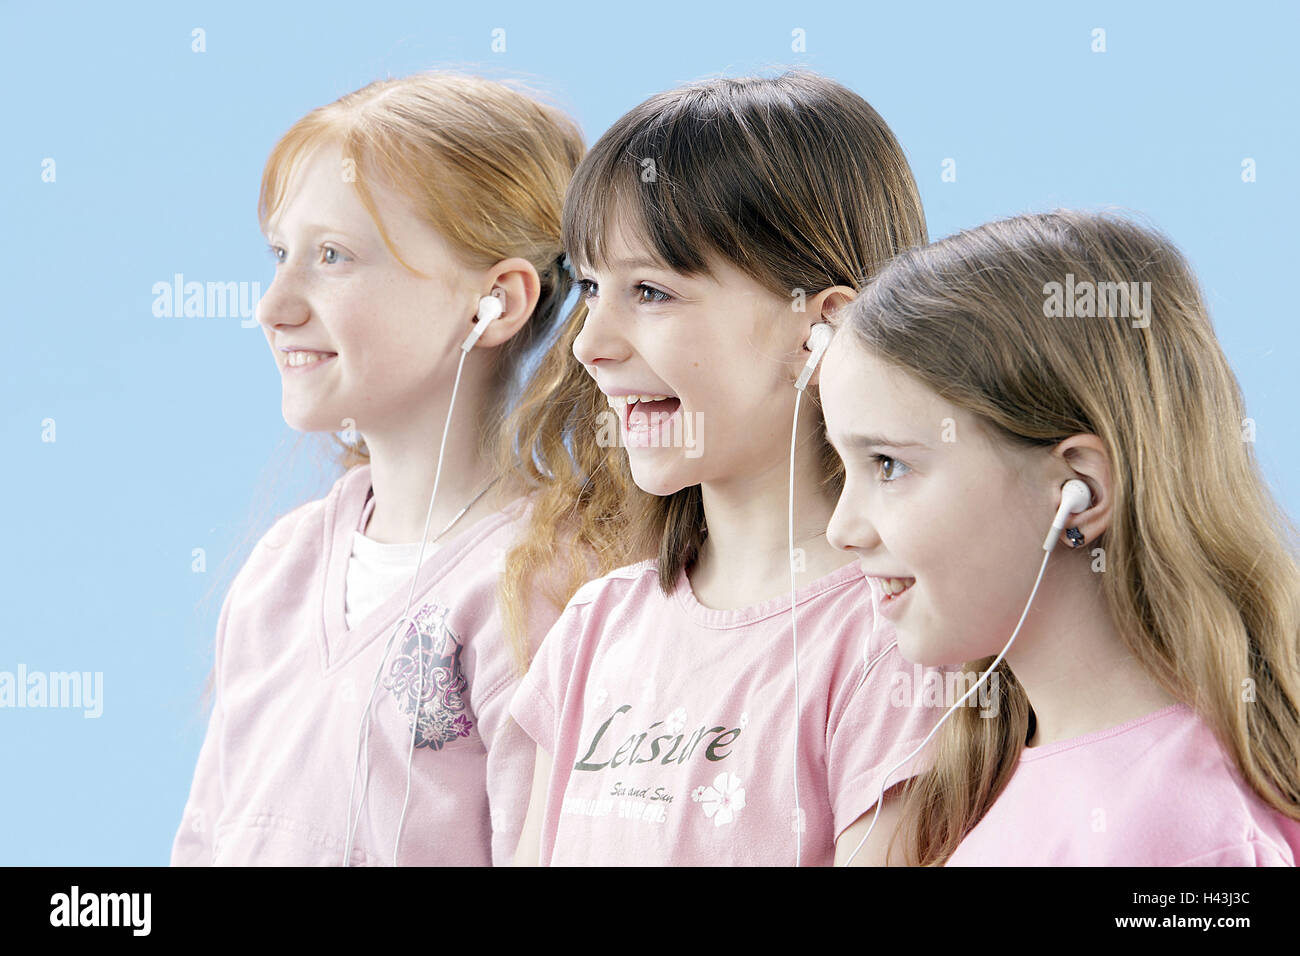 Girls, three, ear listener, music hear, happily, Stock Photo